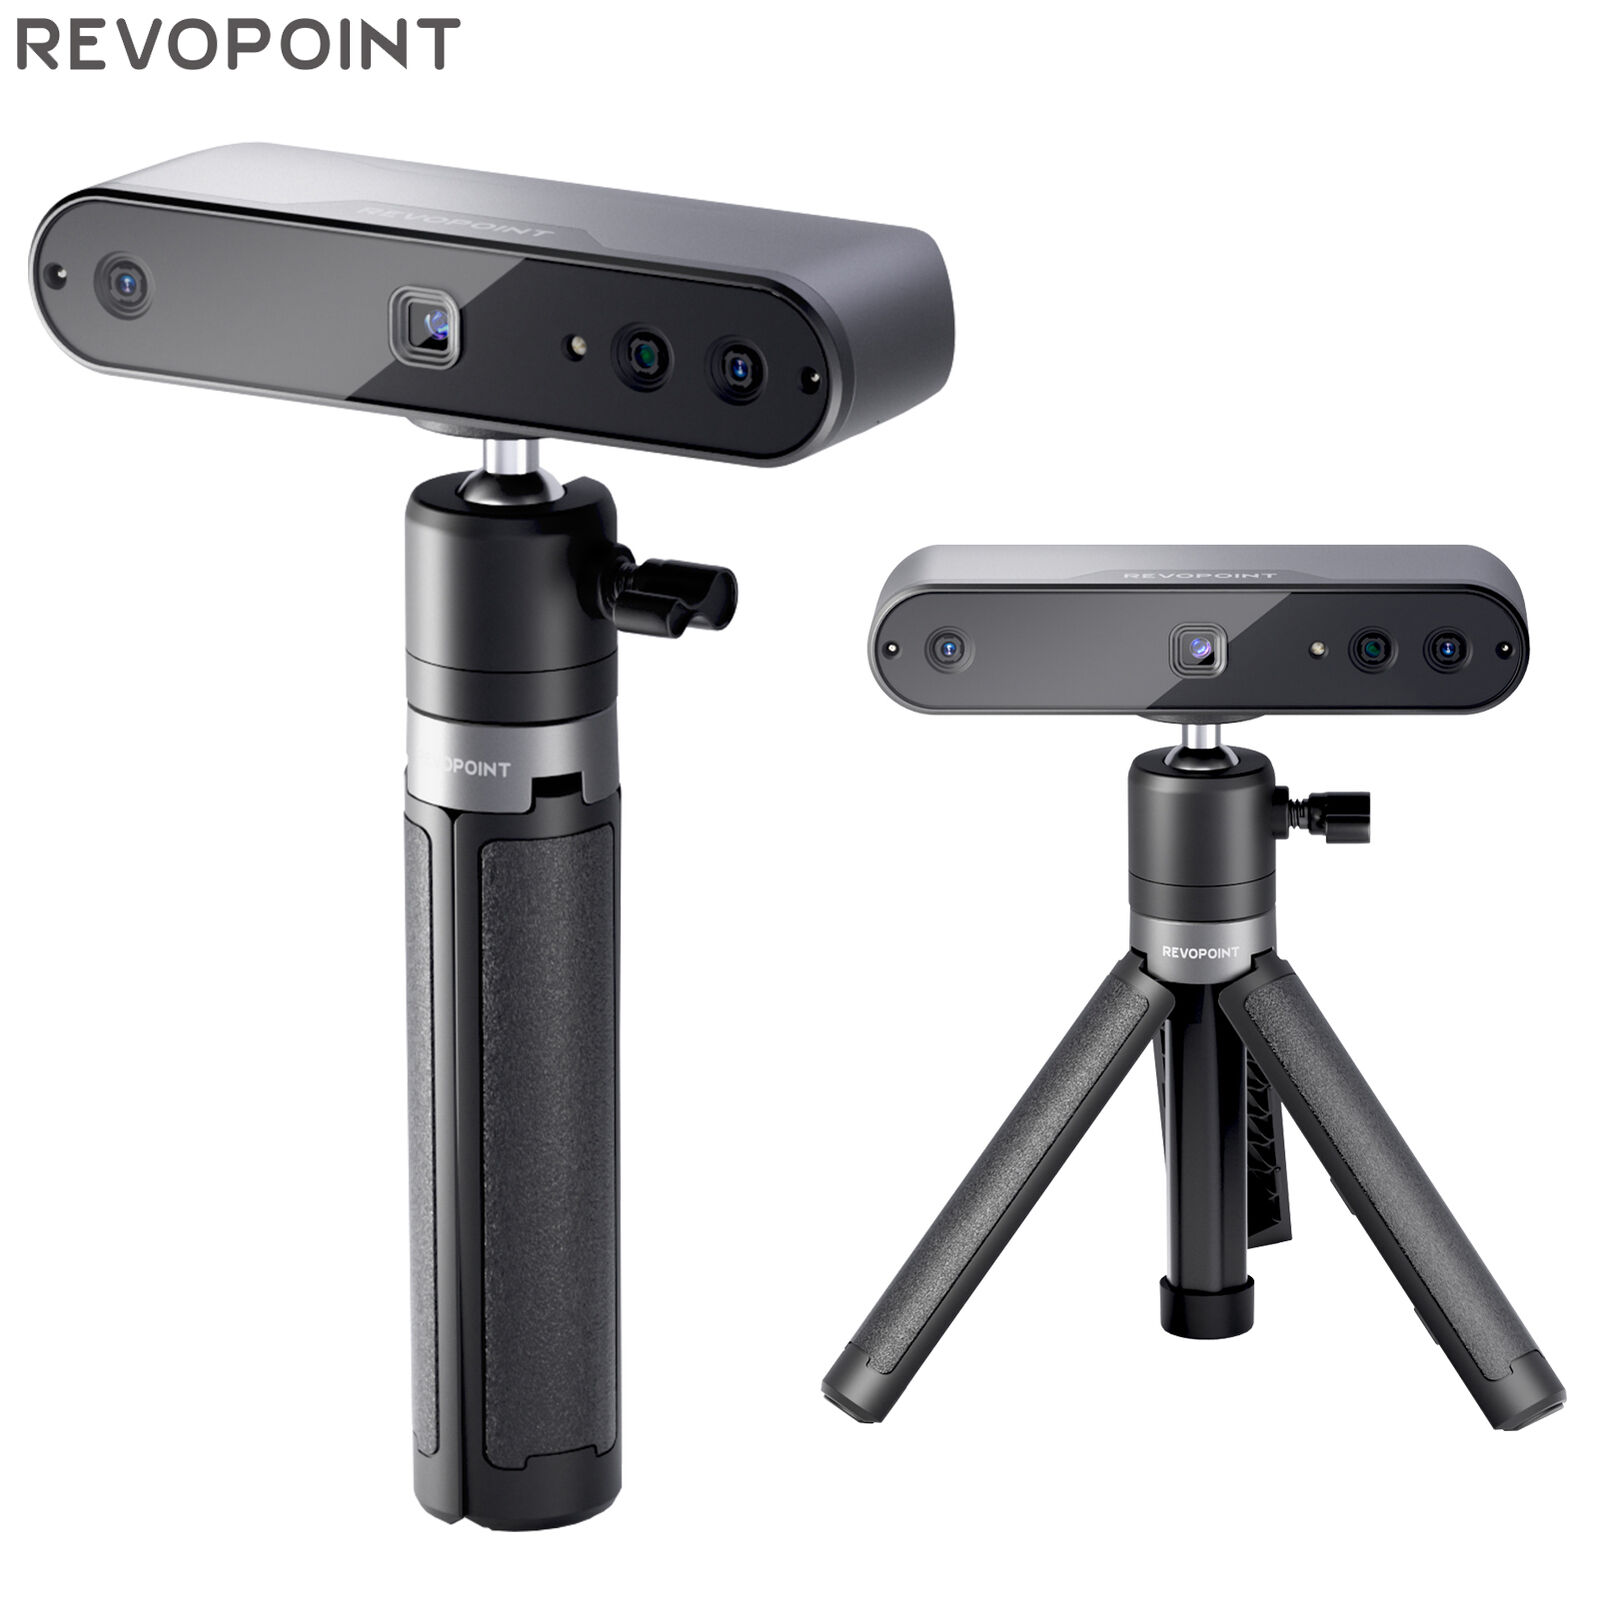 Revopoint INSPIRE 3D Scanner Portable 3D Model Scanning 18 fps Scan Speed M2S5